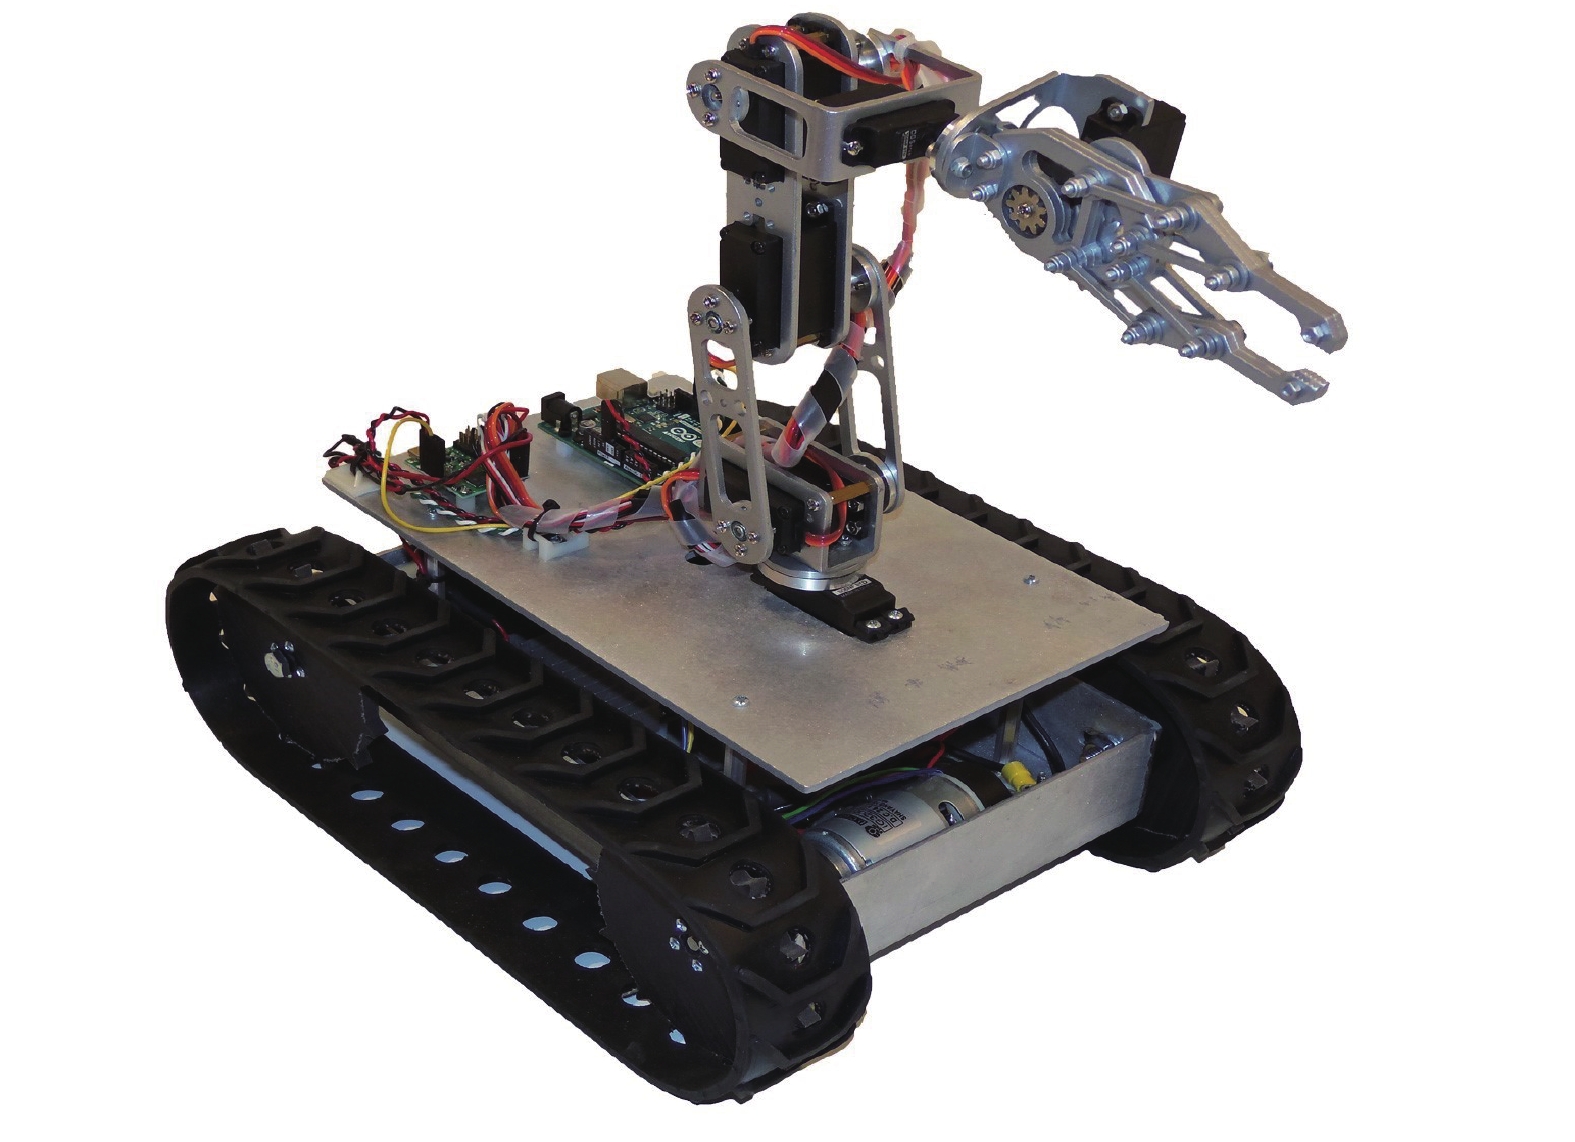 Robotic DIY Electric Terrestrial Robot Construction Track Vehicle Forklift Build 